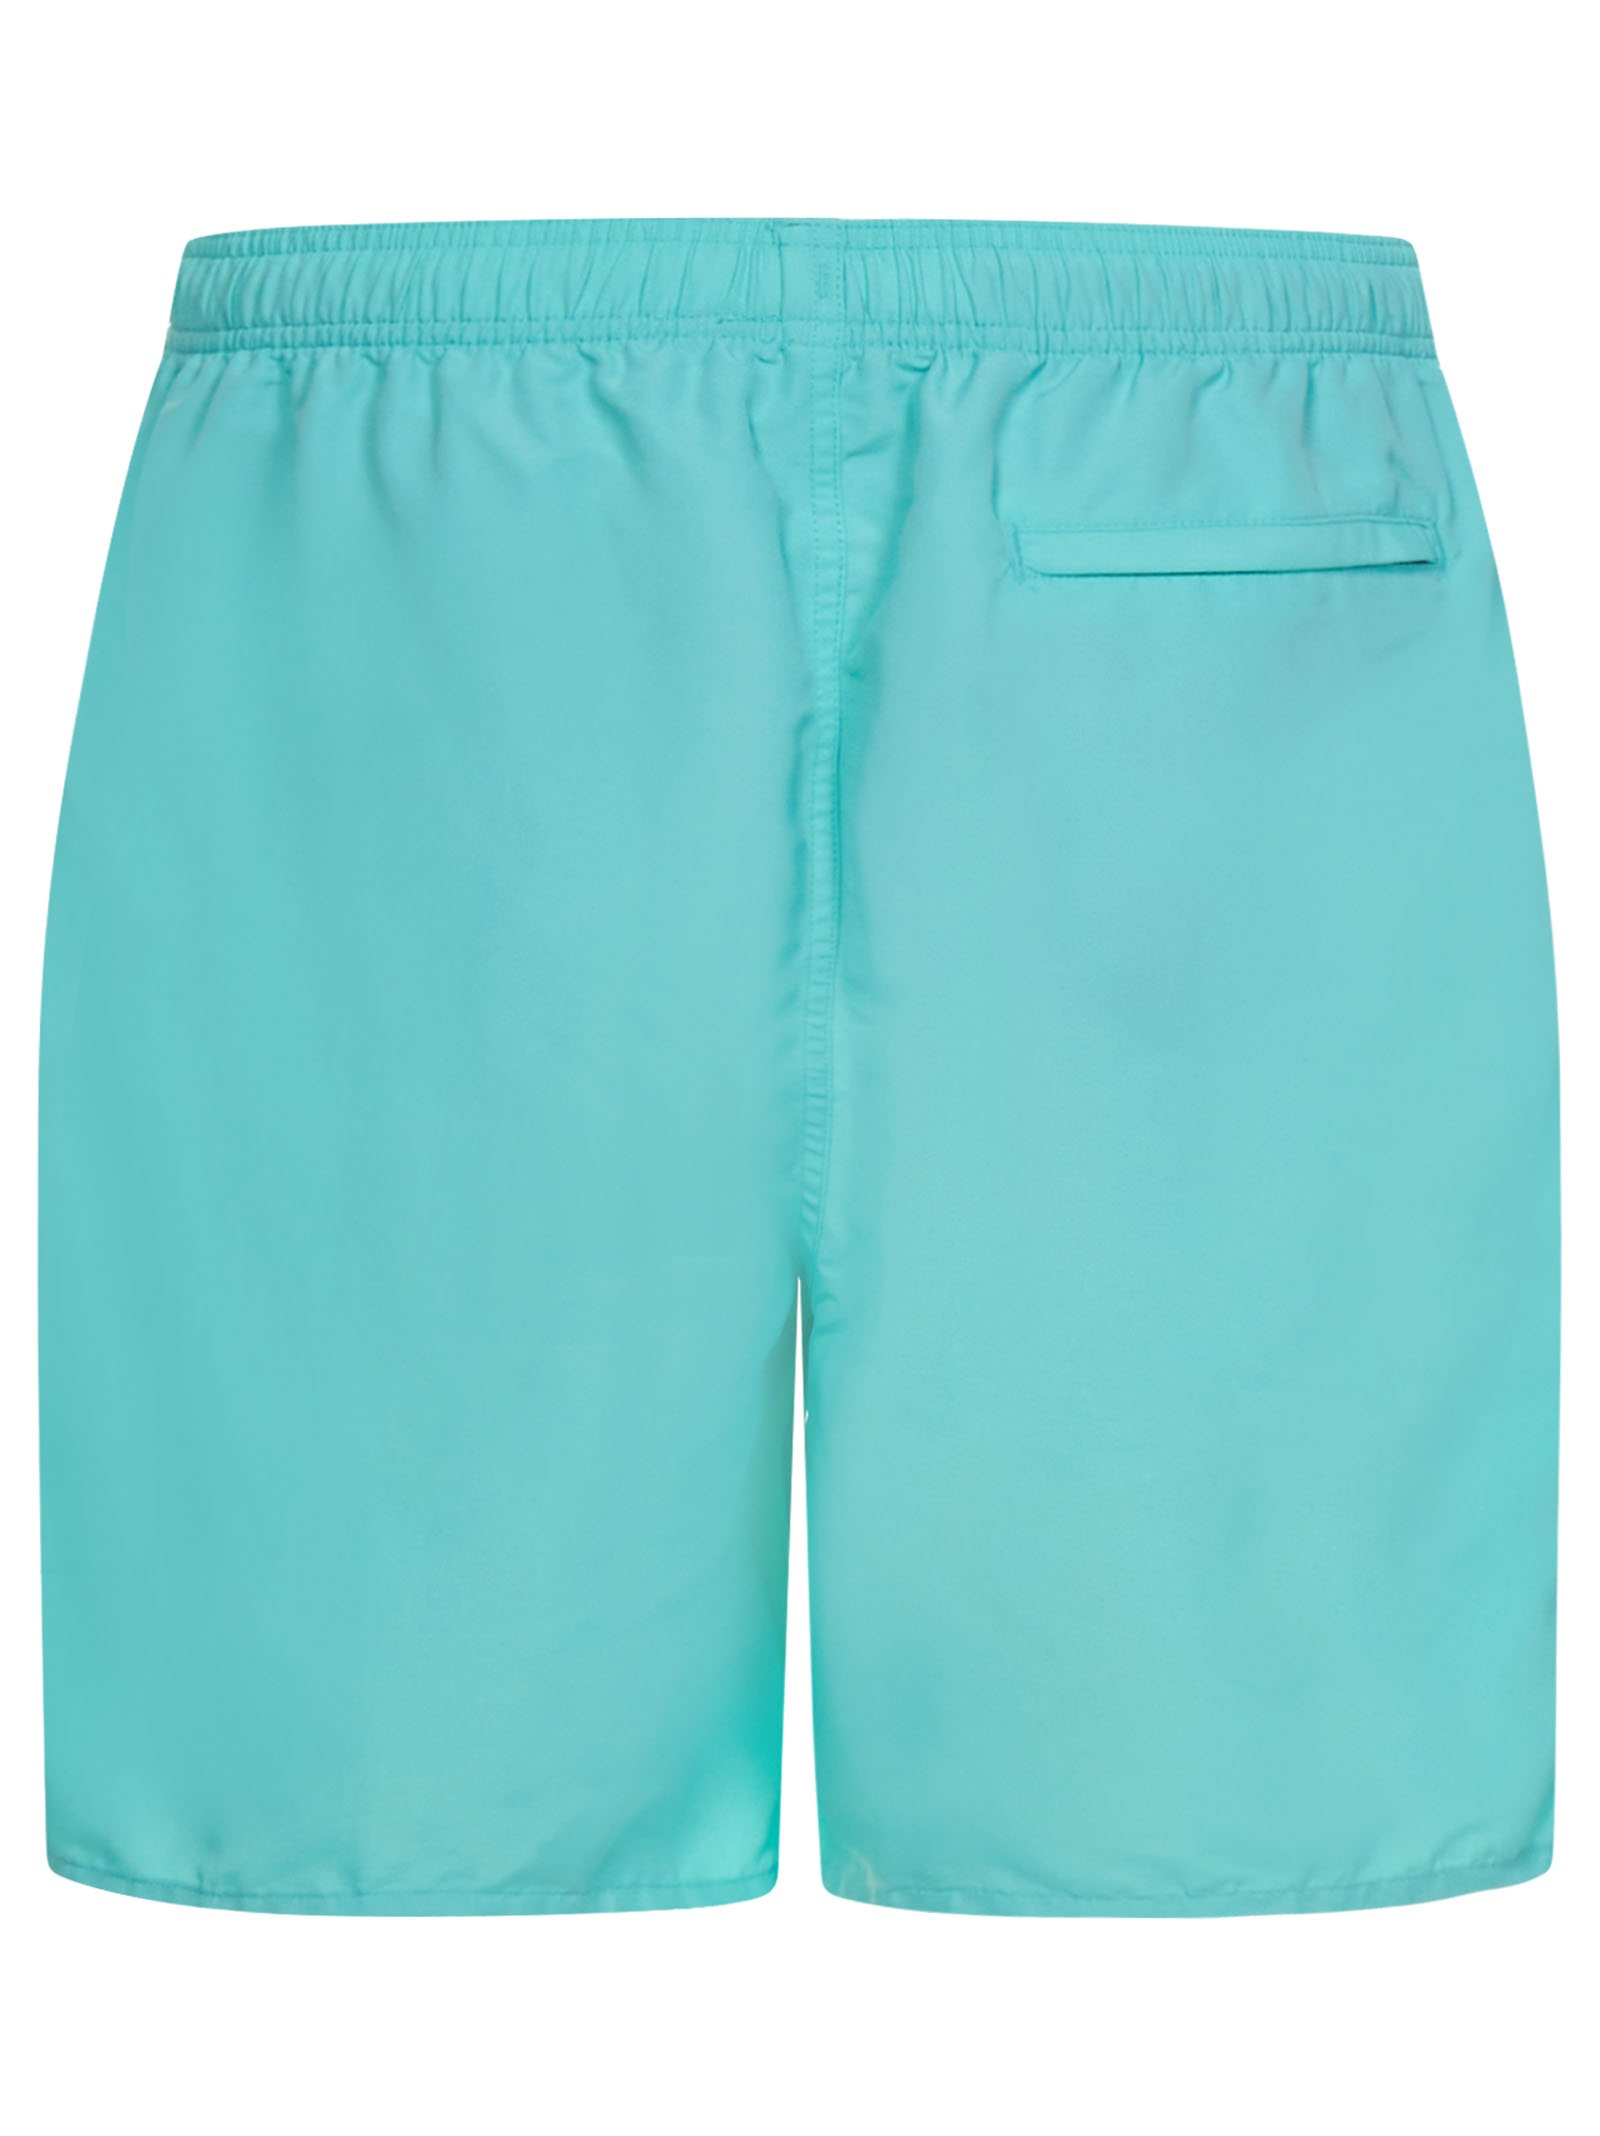 Swimsuit in aquamarine nylon with screen-printed logo on the left leg. - 2